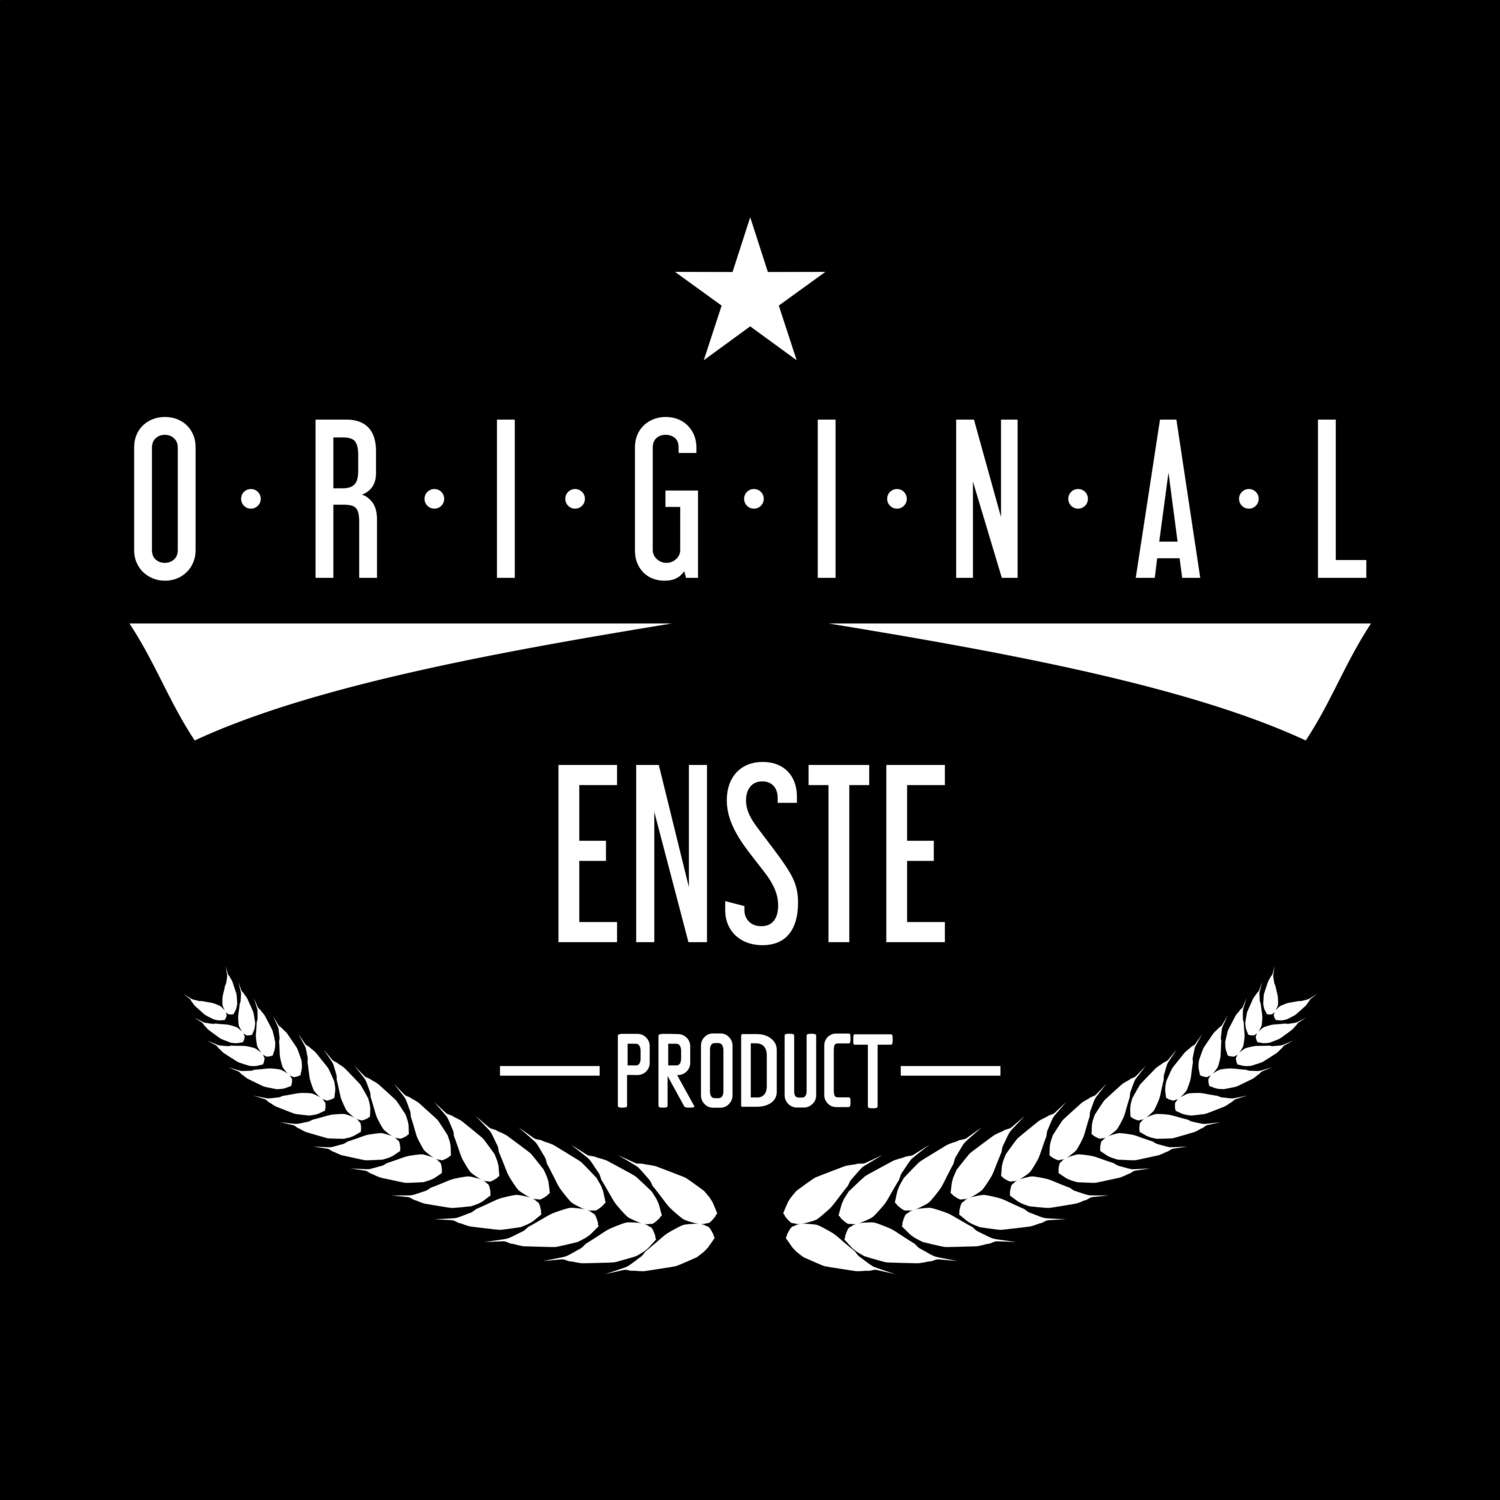 Enste T-Shirt »Original Product«